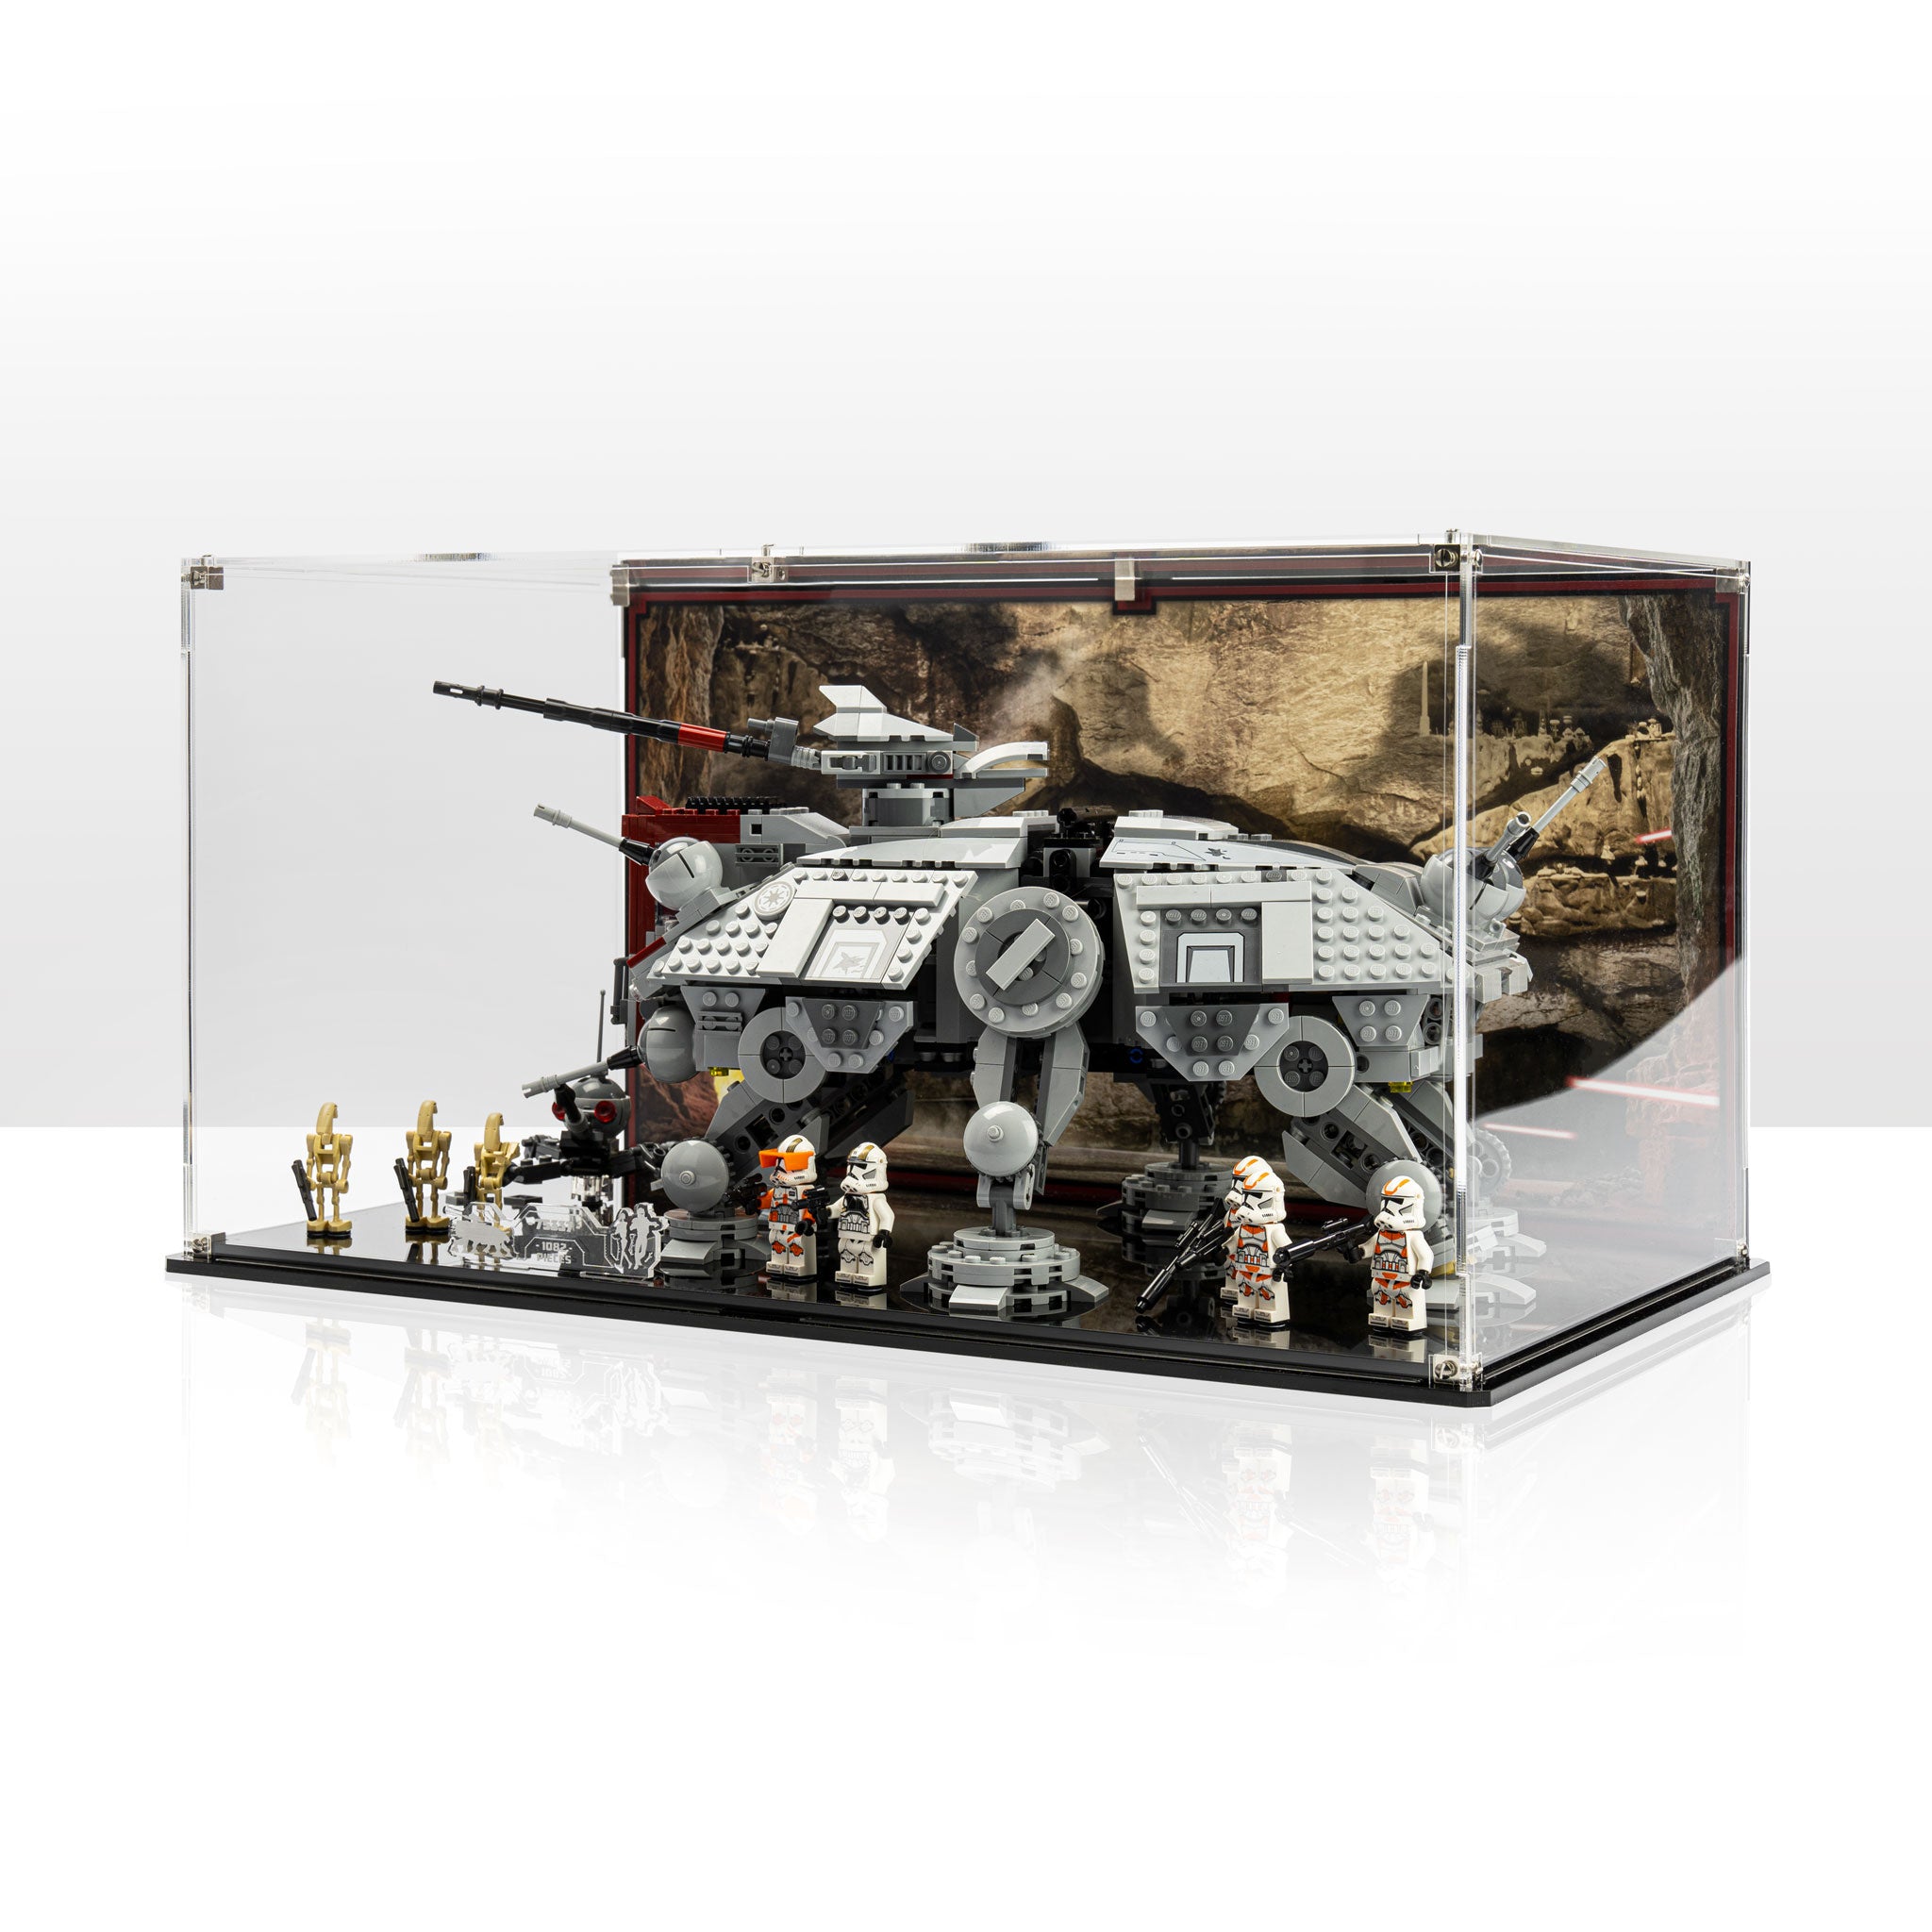 “Acrylic Lego Minifigure Showcase/acrylic lego dust cover